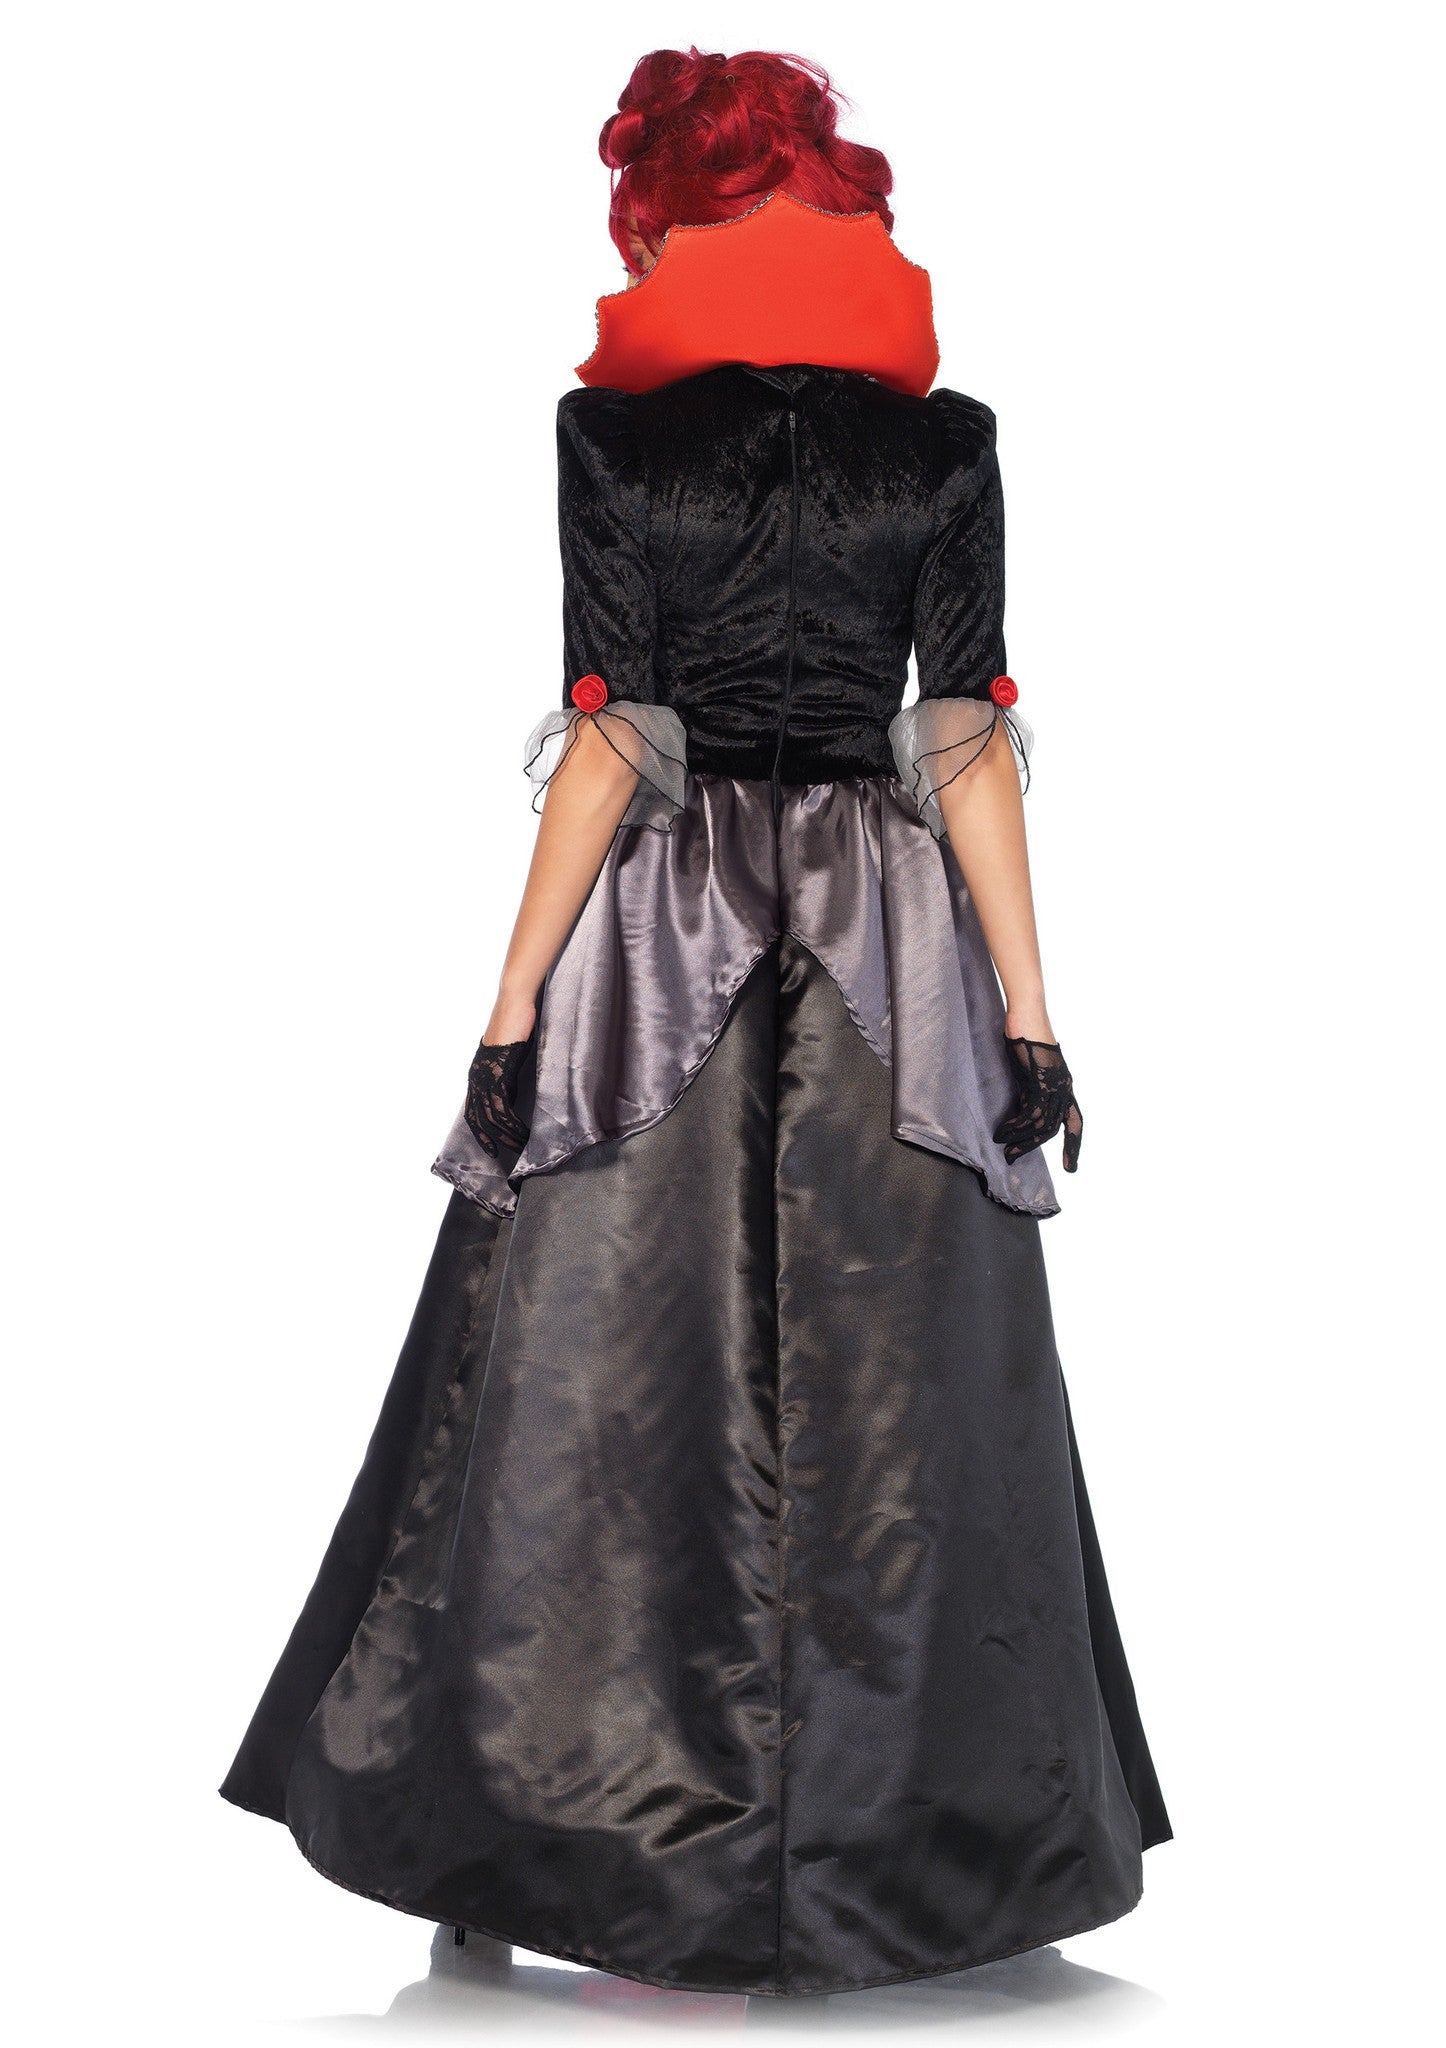 Costume - Blood Countess (Vampire) Costume